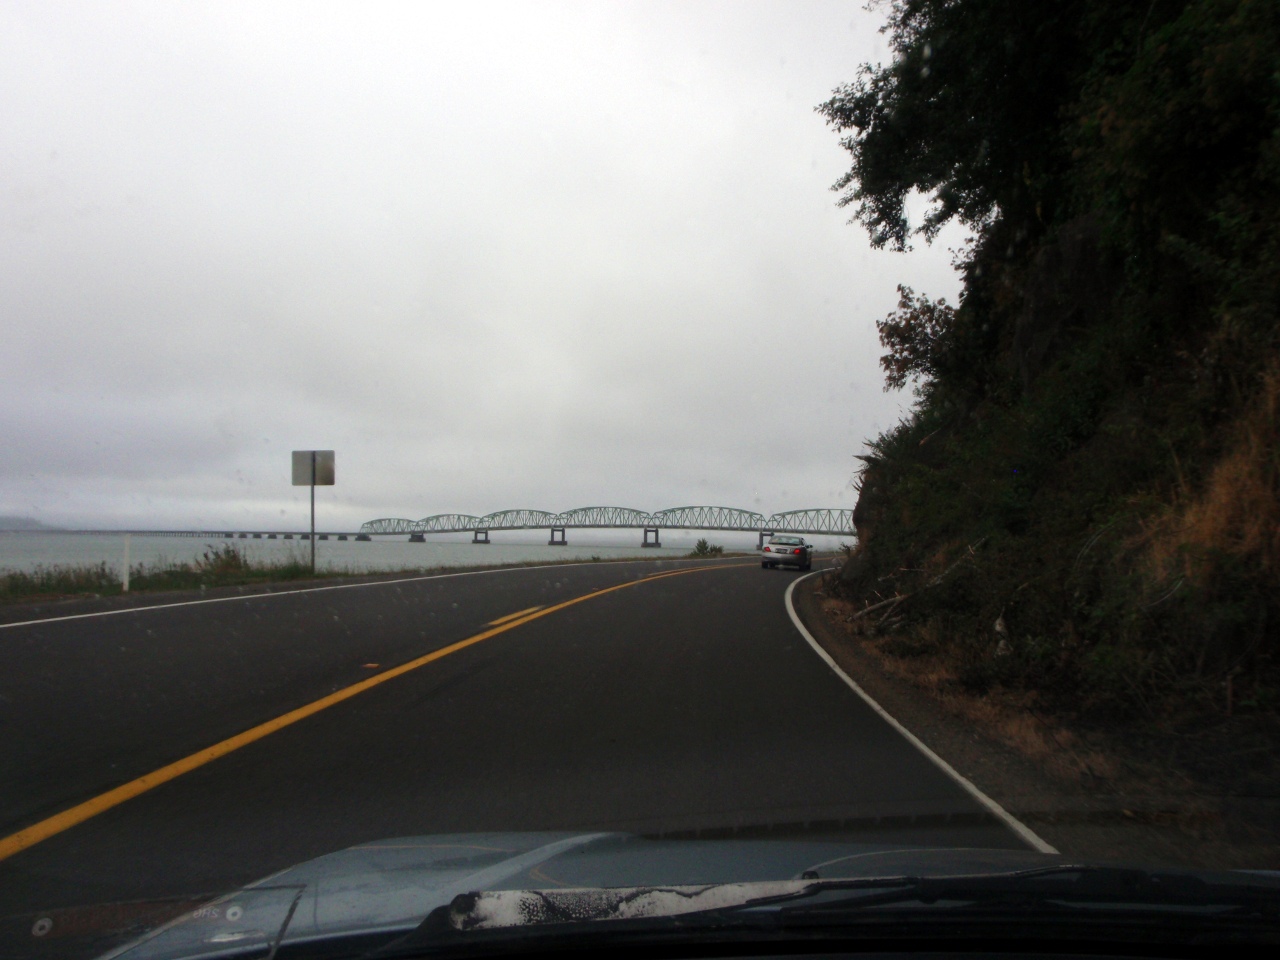 Thursday: back in Oregon. Astoria Bridge